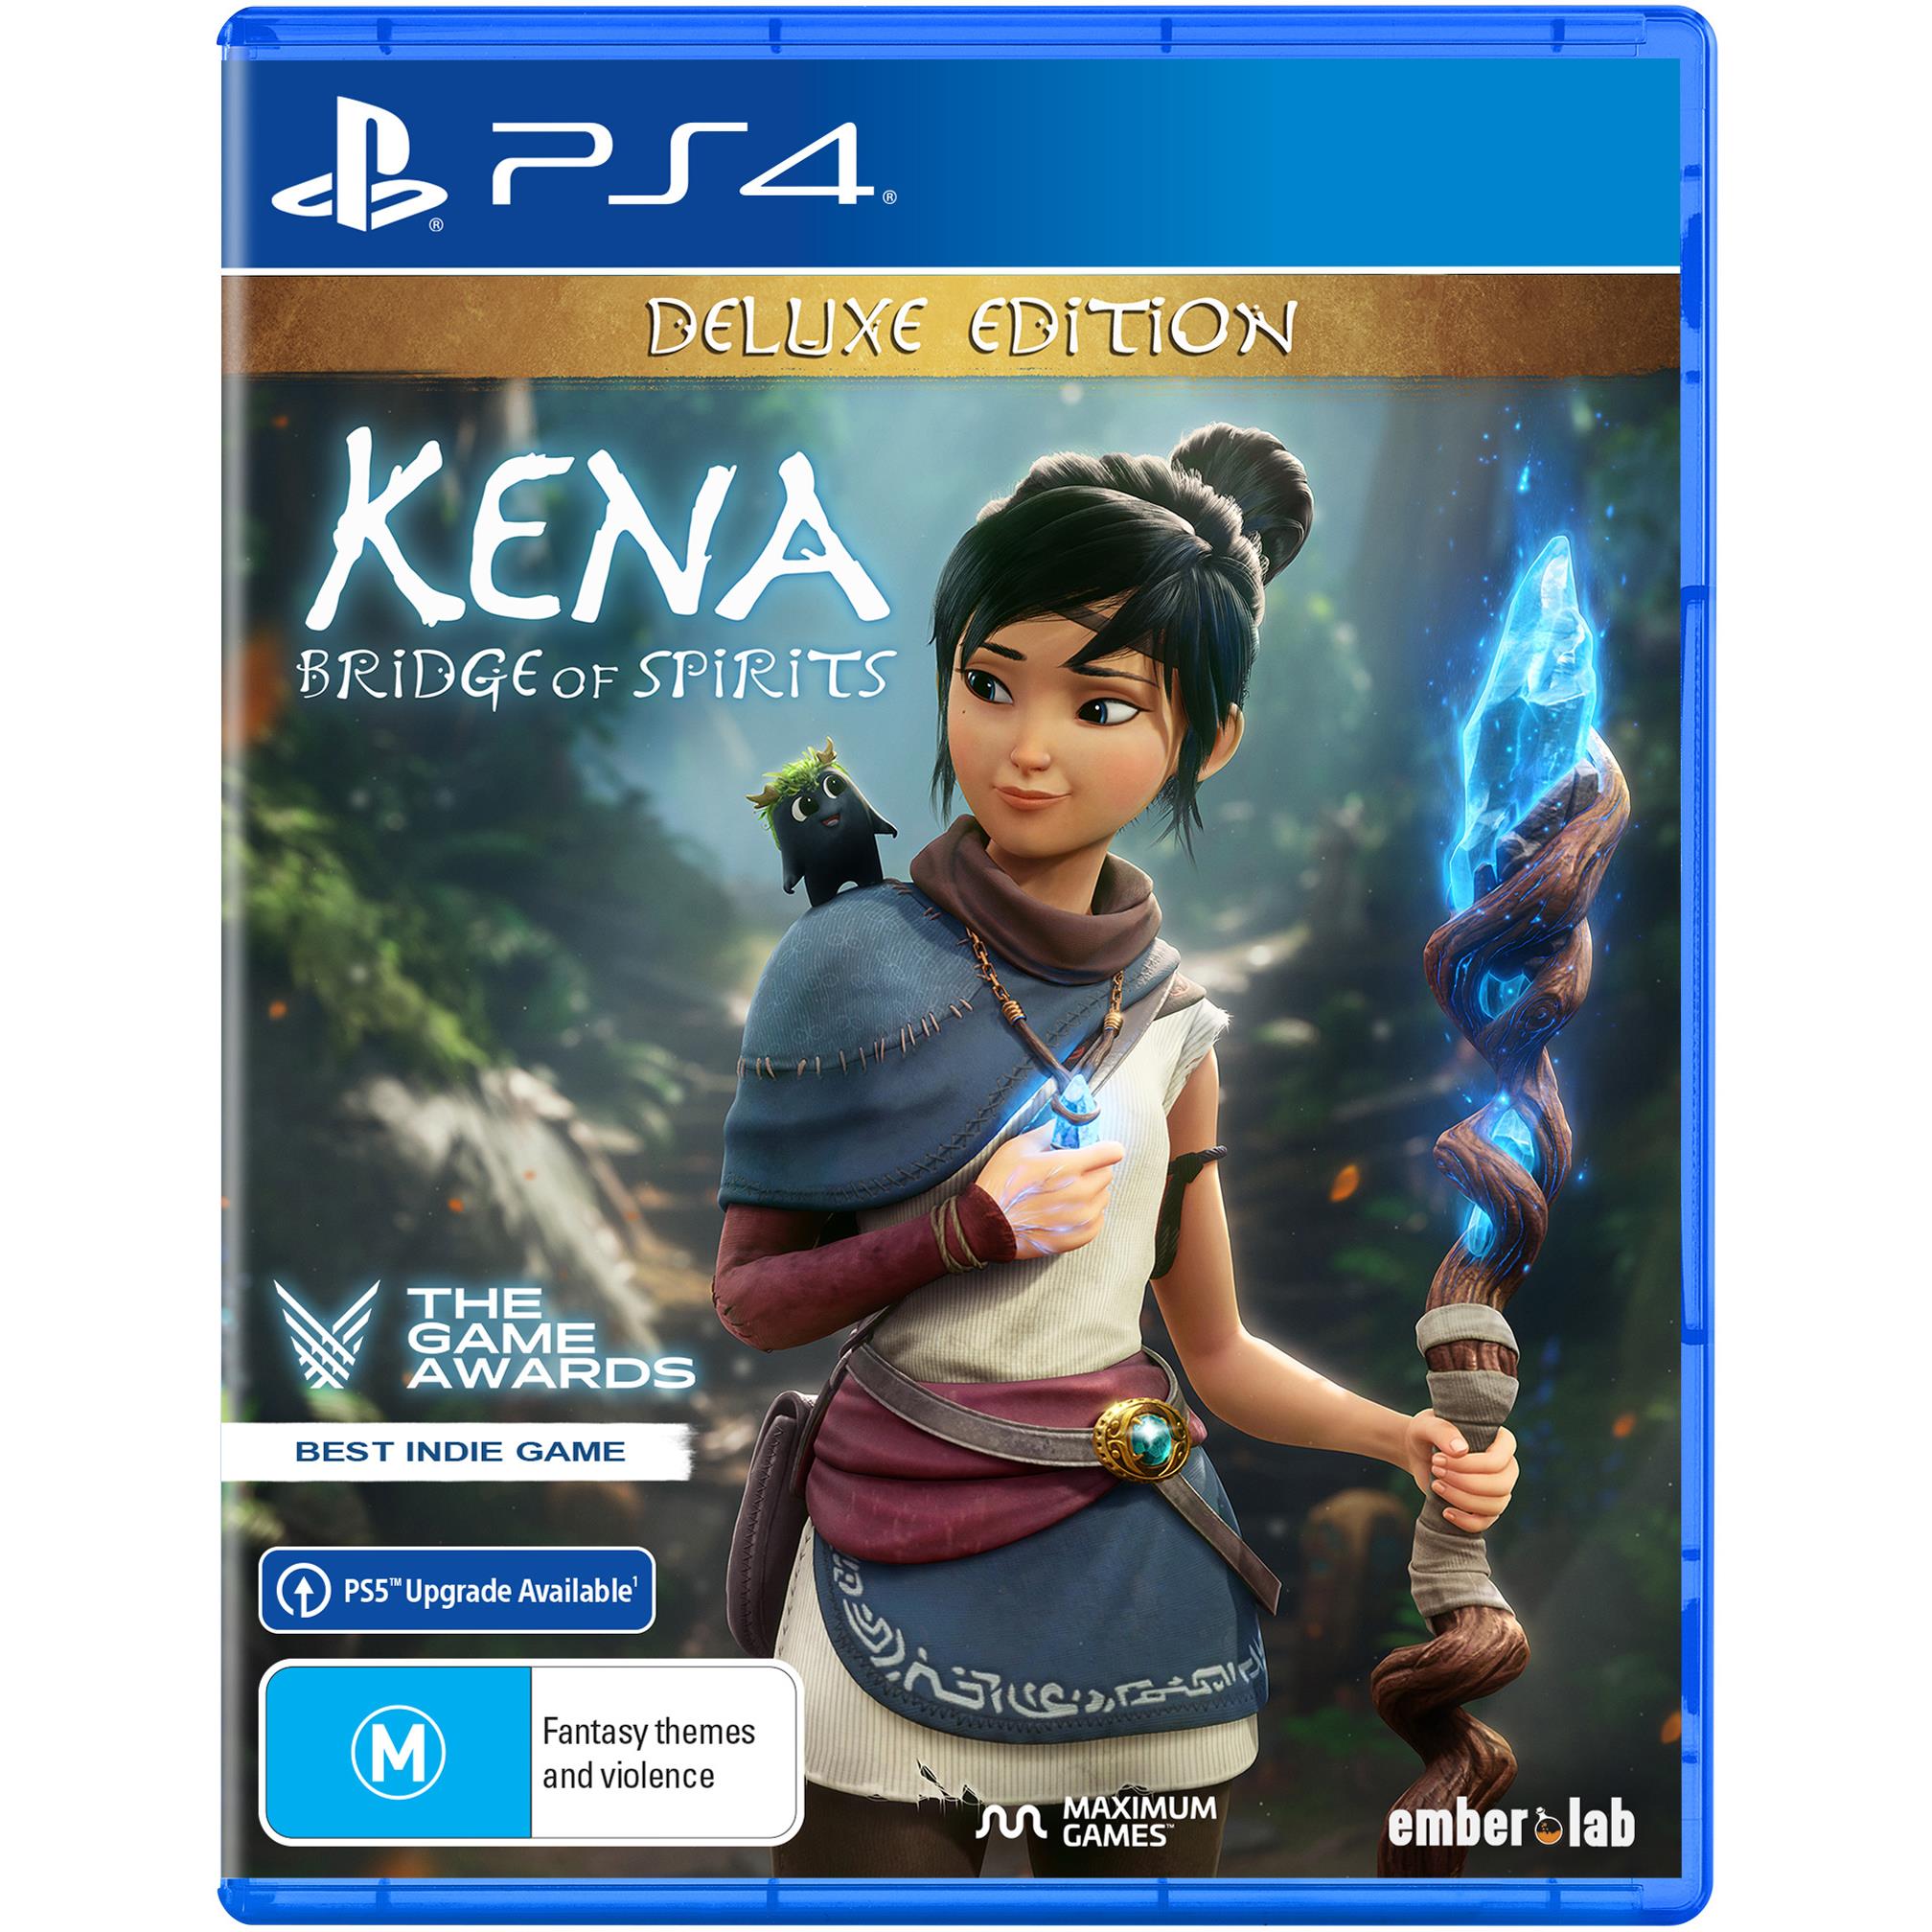 kena: bridge of spirits deluxe edition